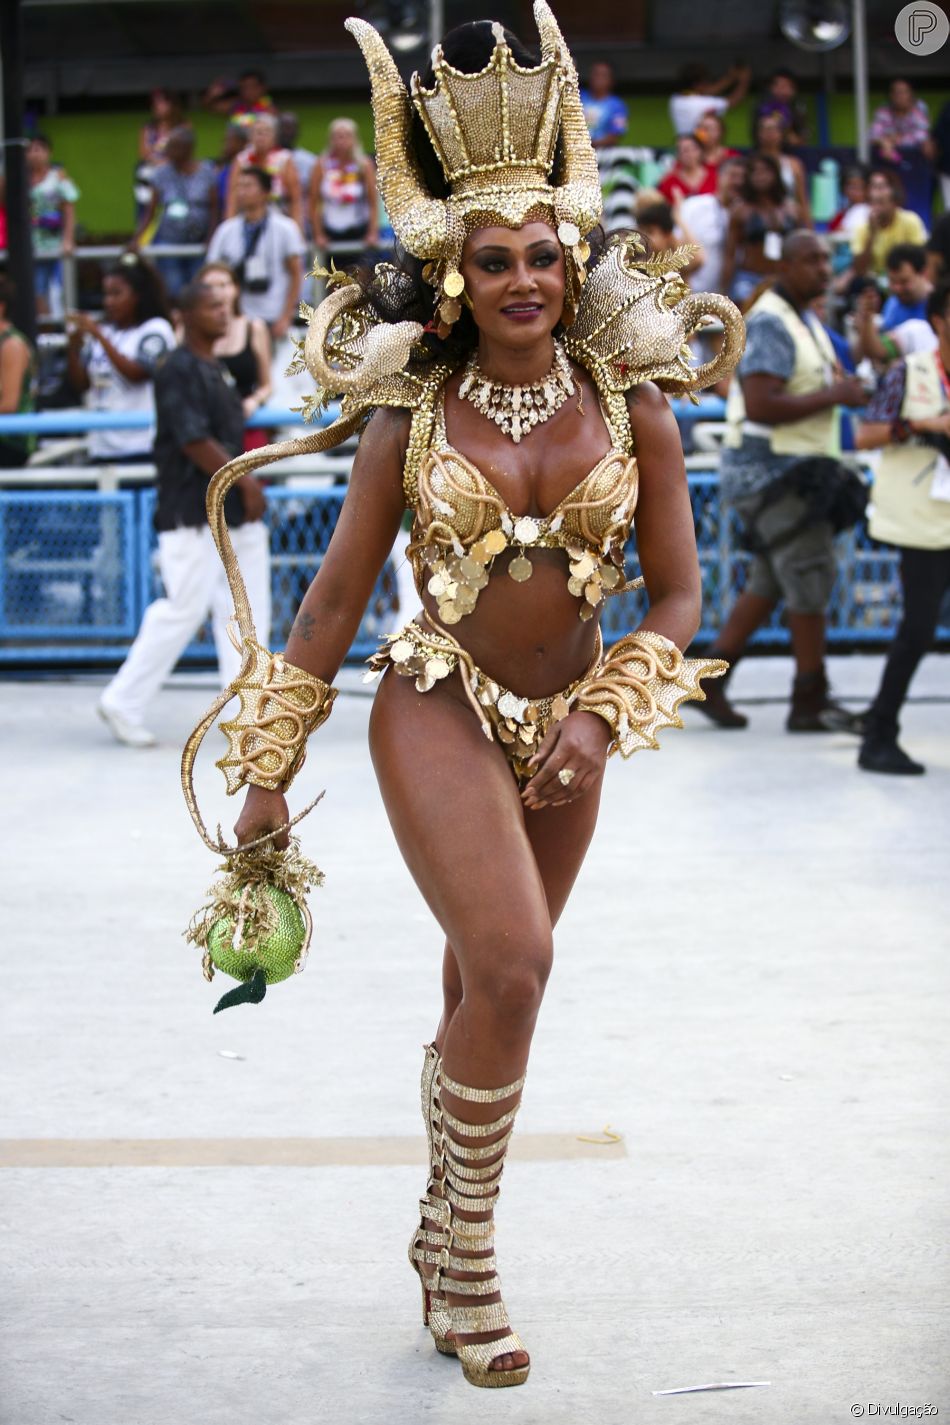 Звезды карнавала. Танцовщица Самбадрома Камила Силва. Рио де Жанейро Амазонка. Карнавал похудела.